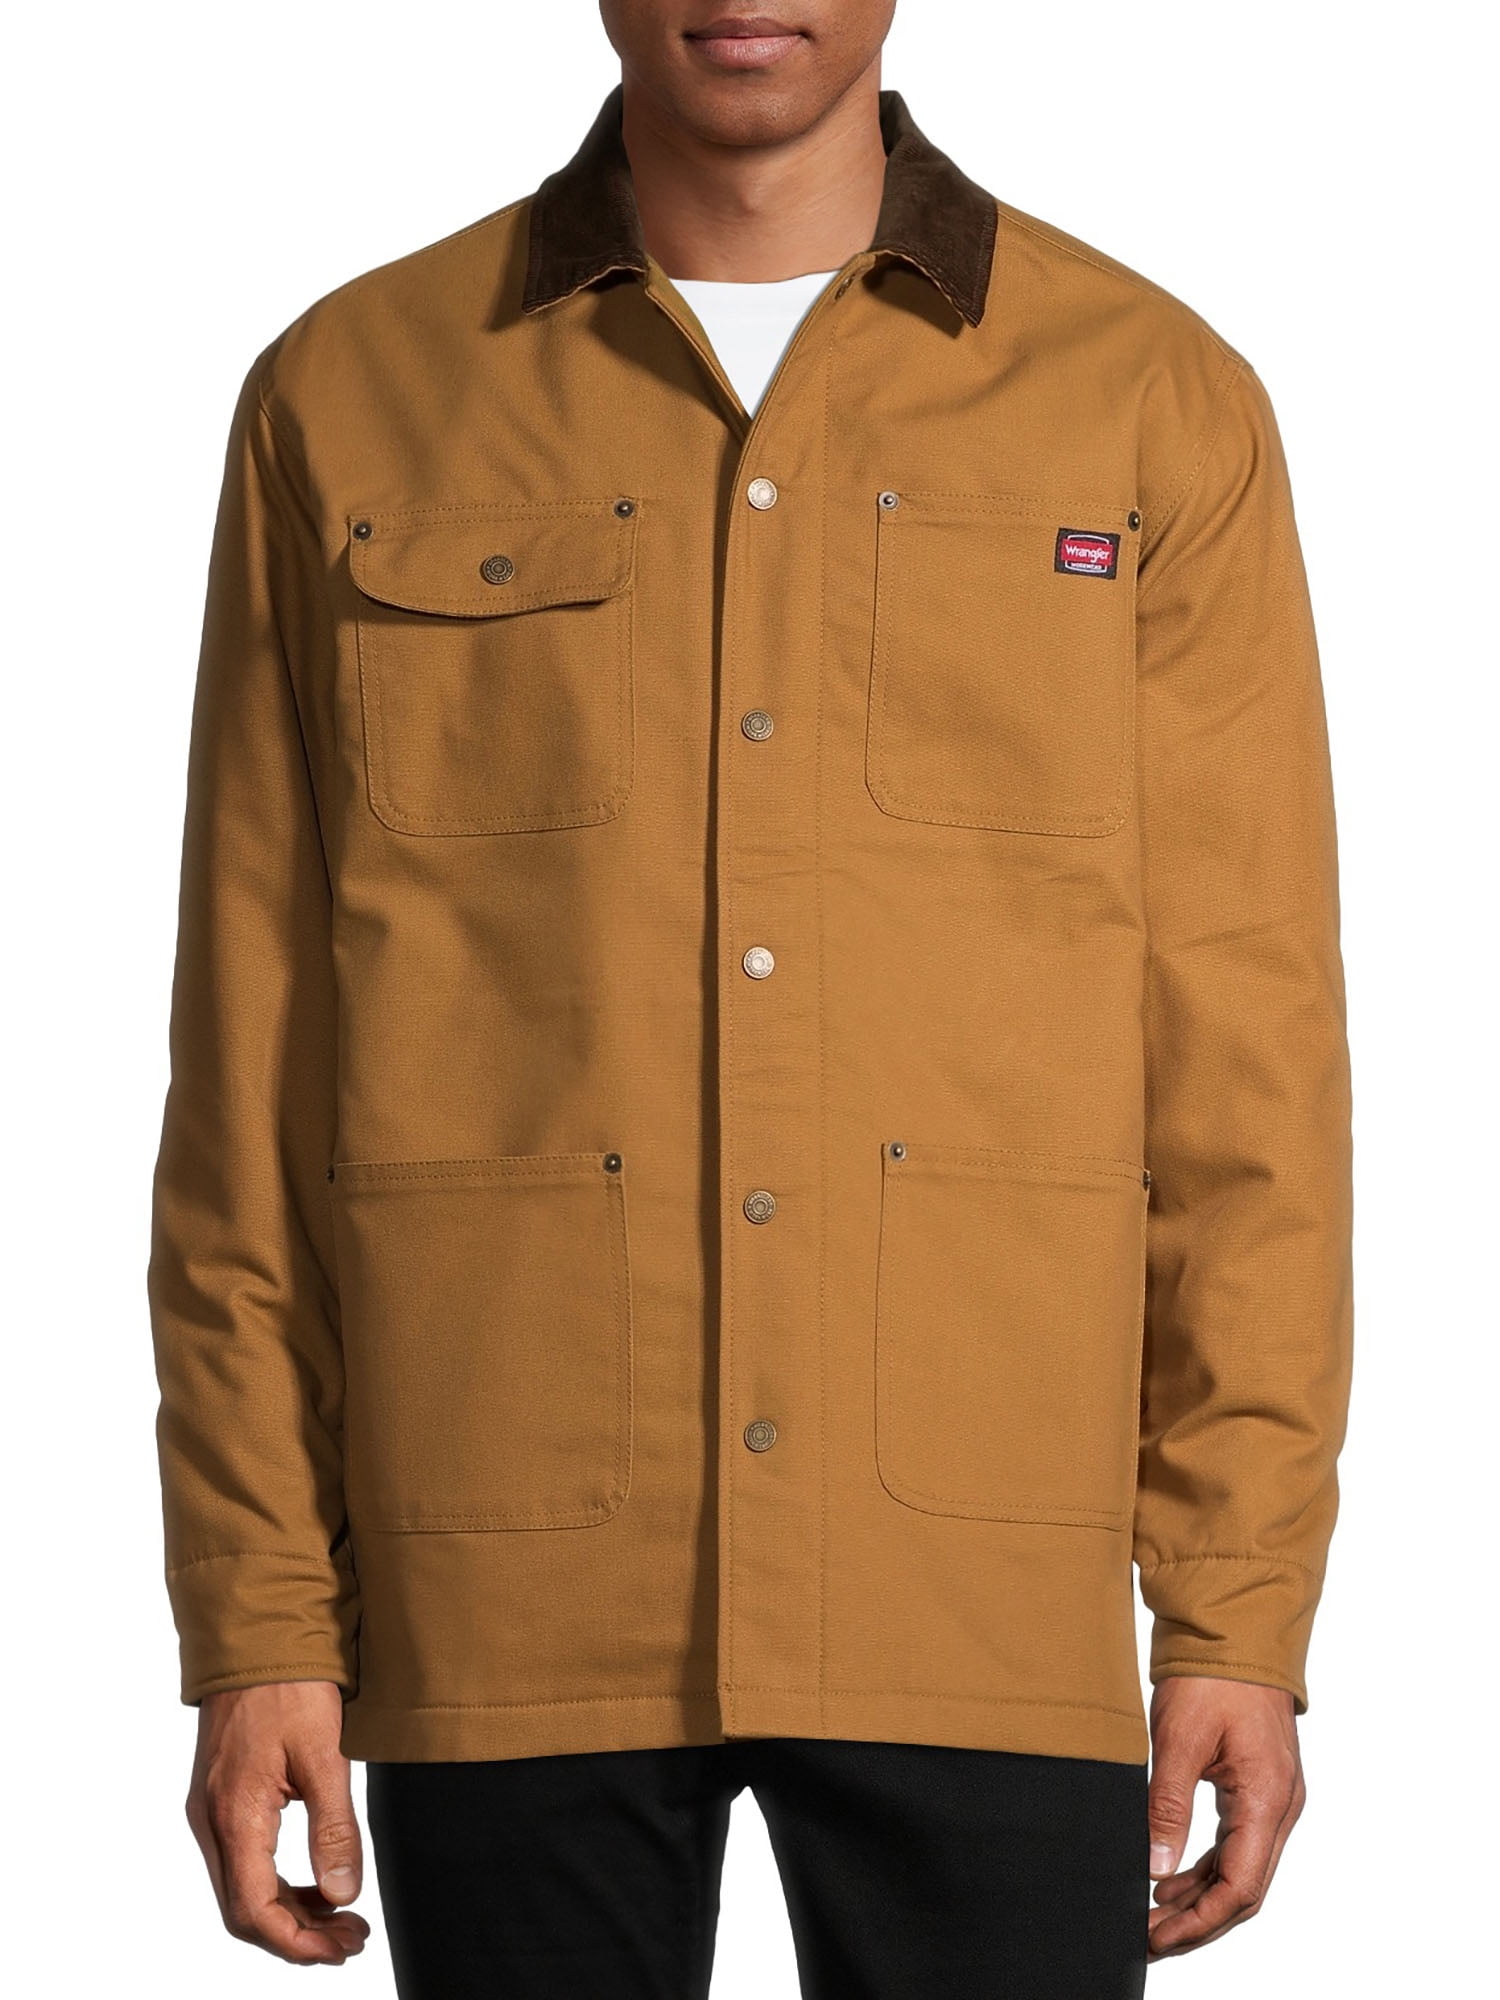 Wrangler Workwear Men's Flex Barn Chore Coat Jacket with Warm Durable  Blanket Lining 